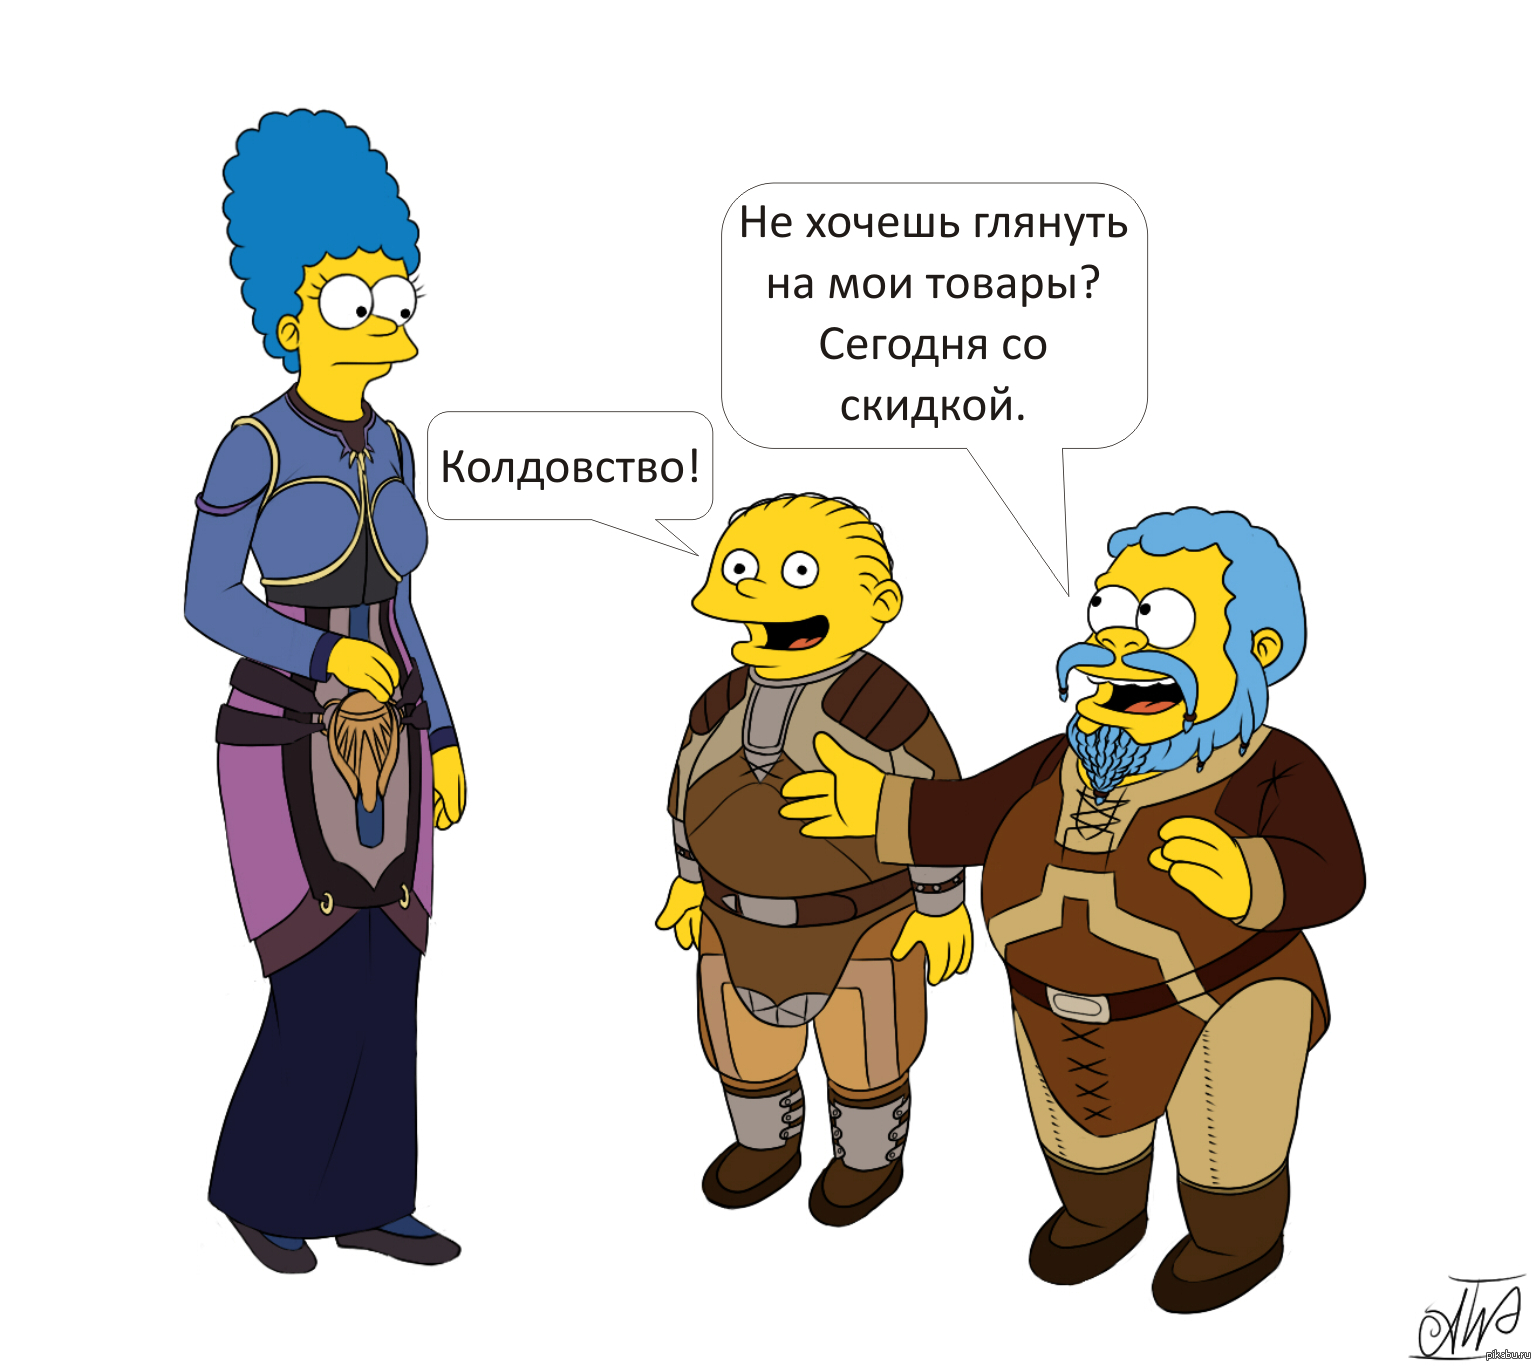 -, : "The Simpsons"  "Dragon Age: Origins"